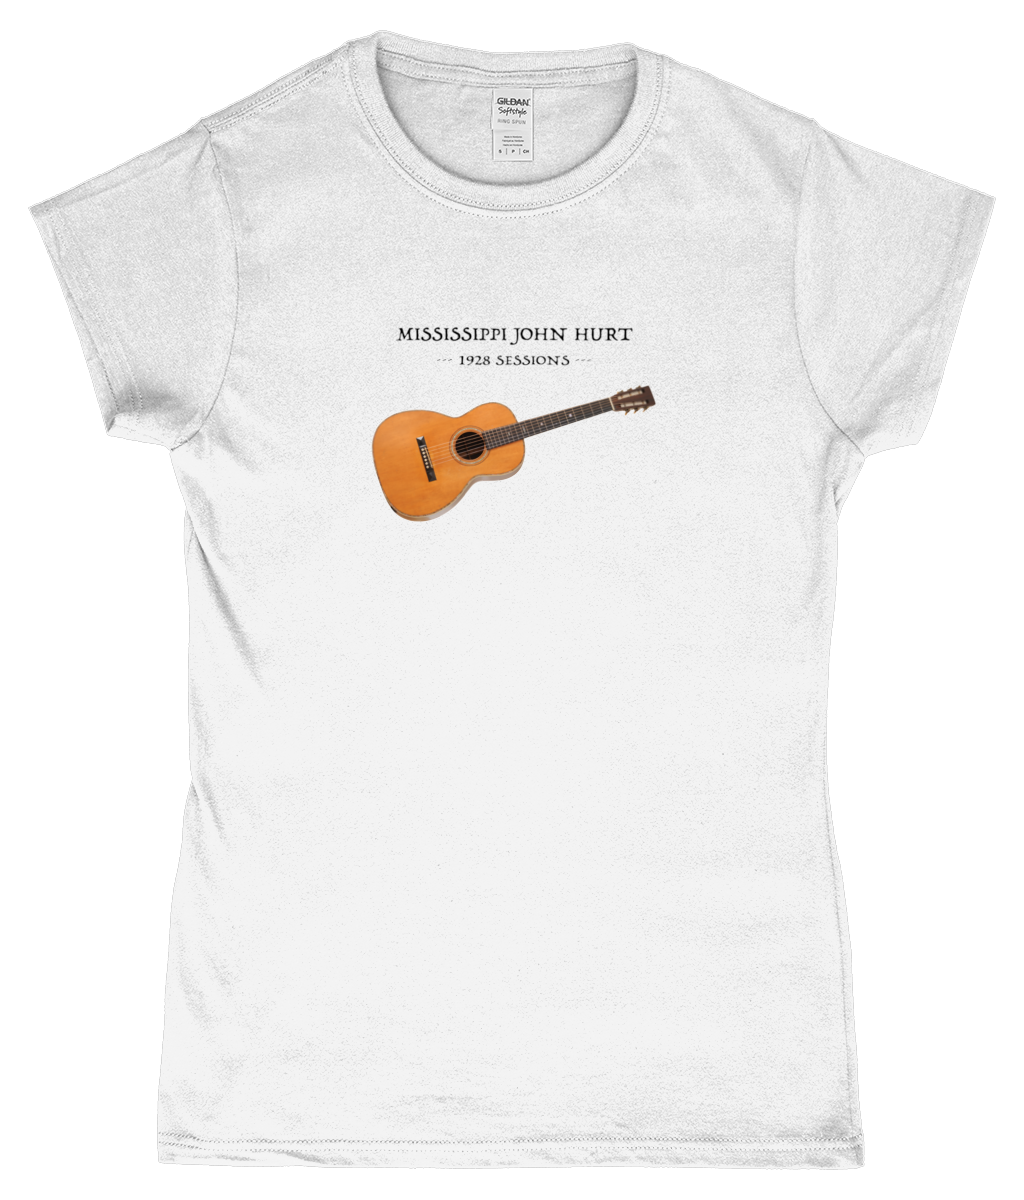 Mississippi John Hurt, 1928 Sessions, T-Shirt, Women's